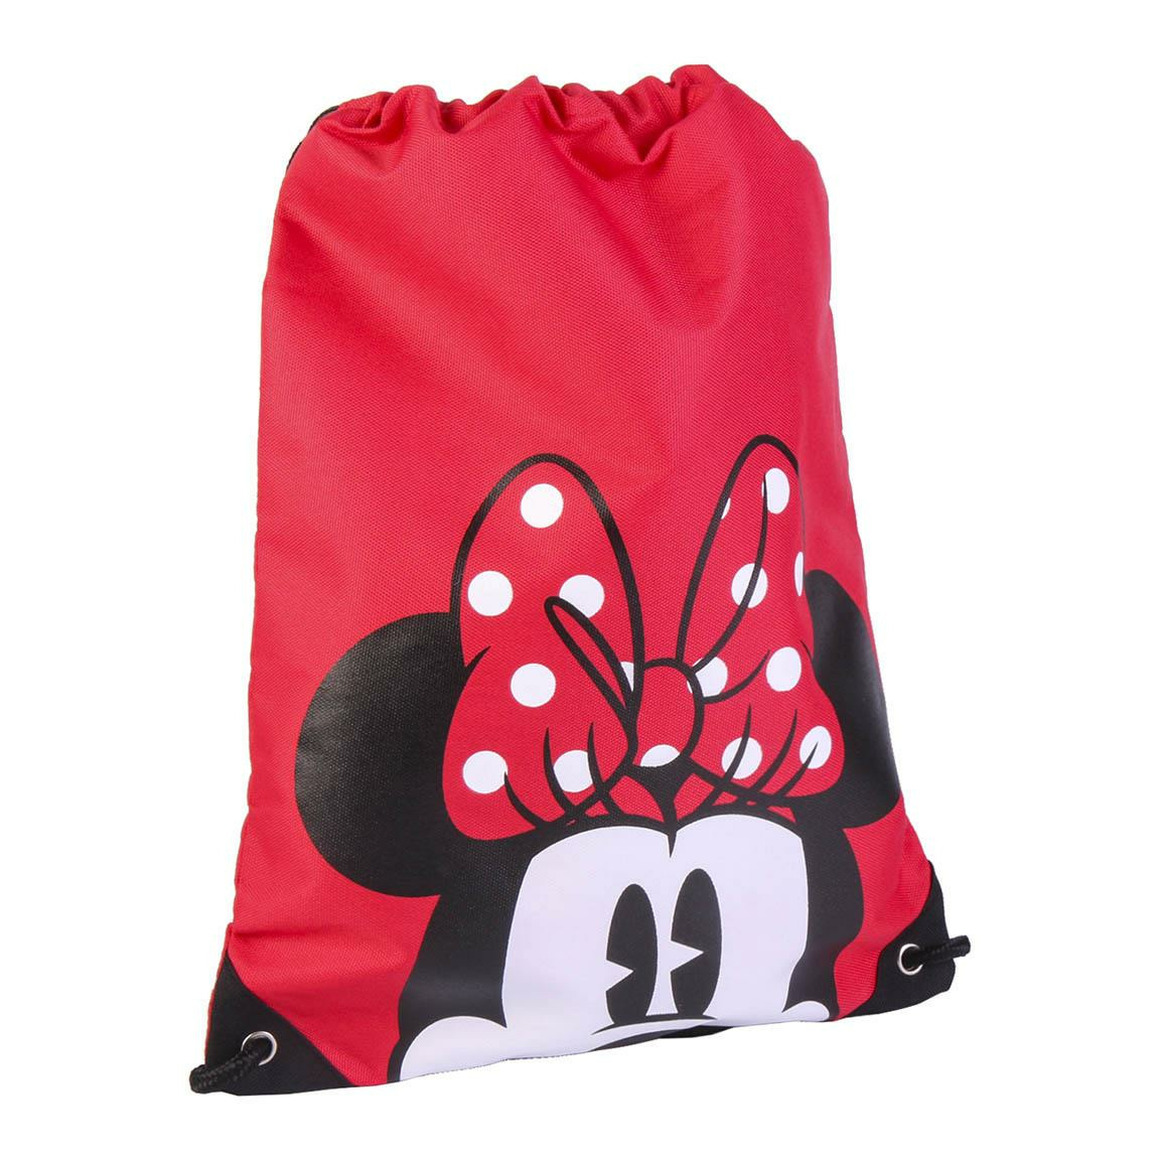 Disney Minnie Mouse gymtas-rugzak-rugtas voor kinderen rood polyester 29 x 40 cm